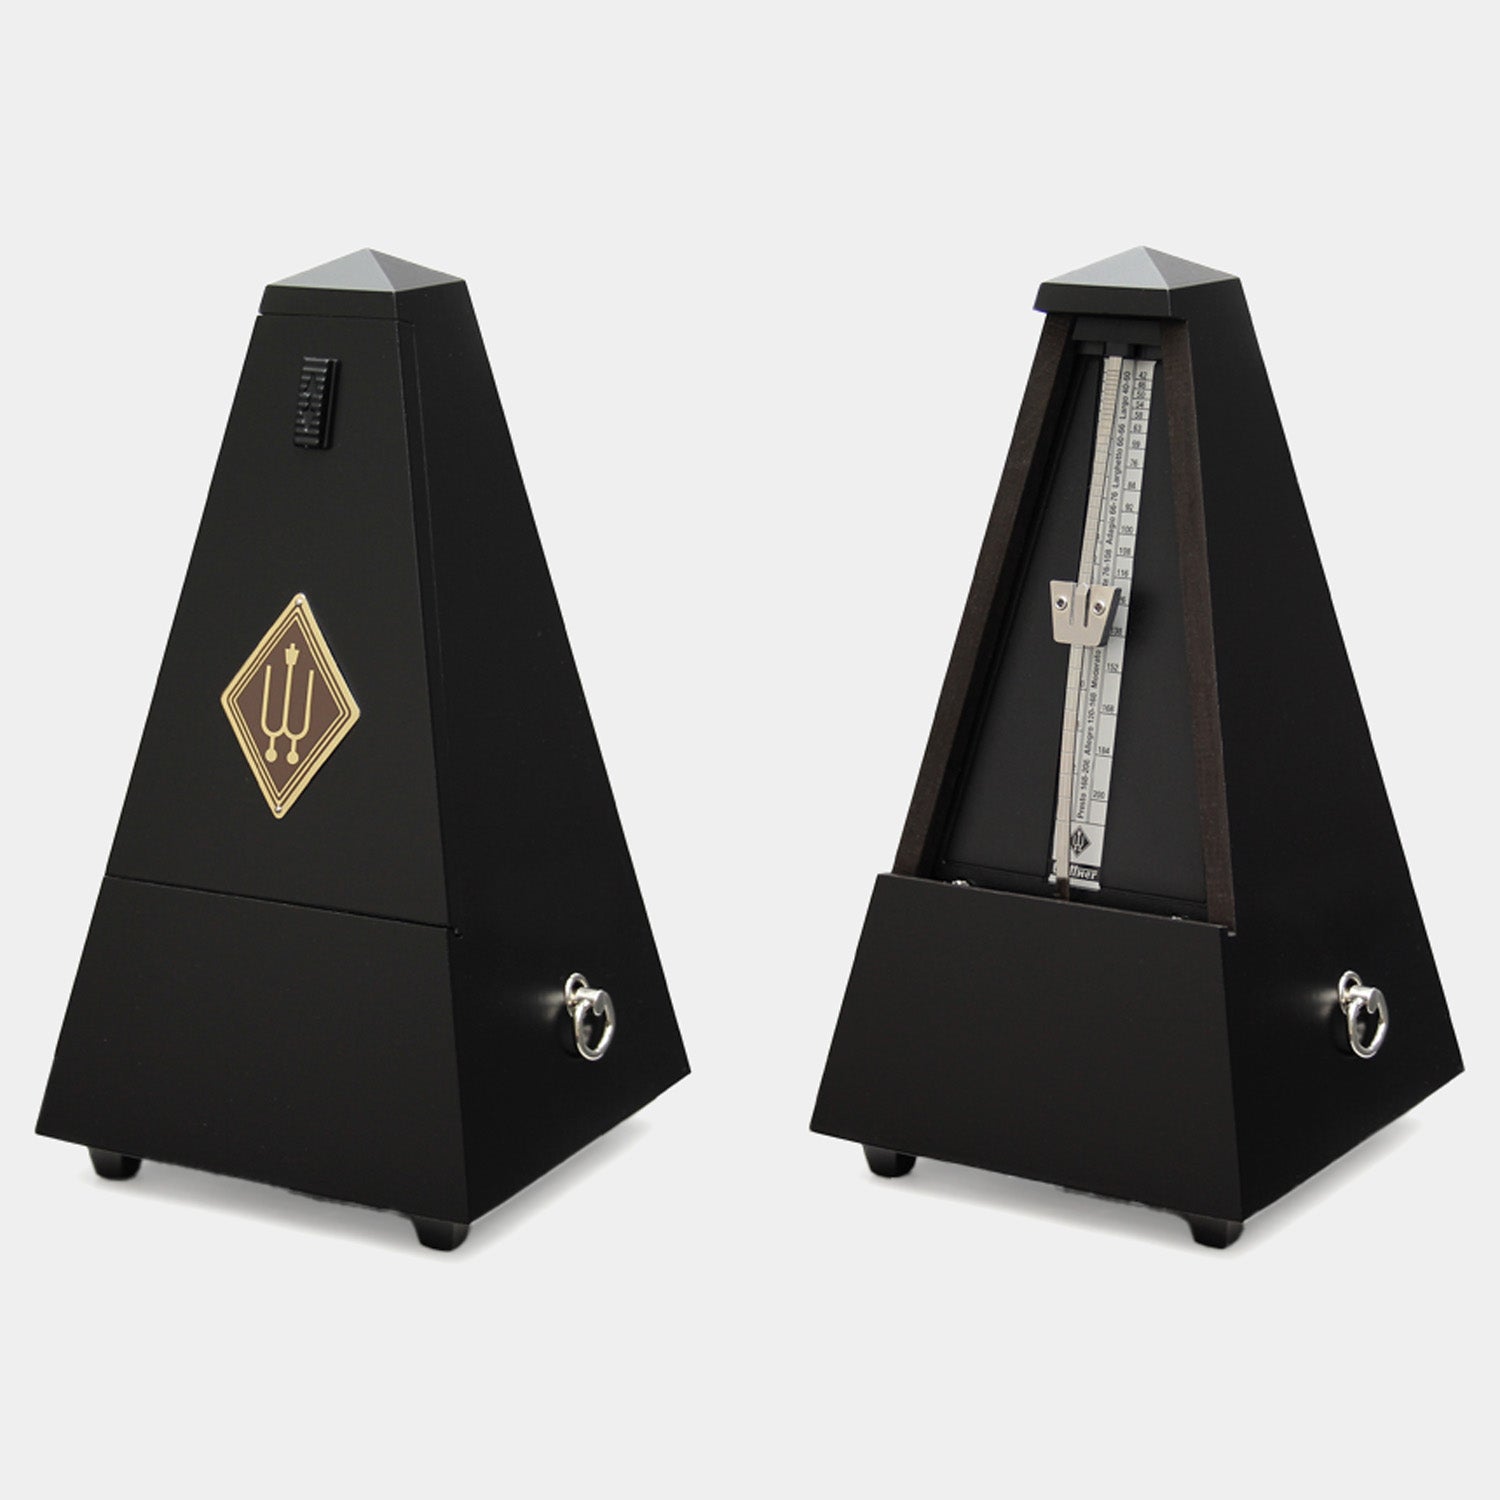 Metronome in Matt Black Solid Wooden Casing